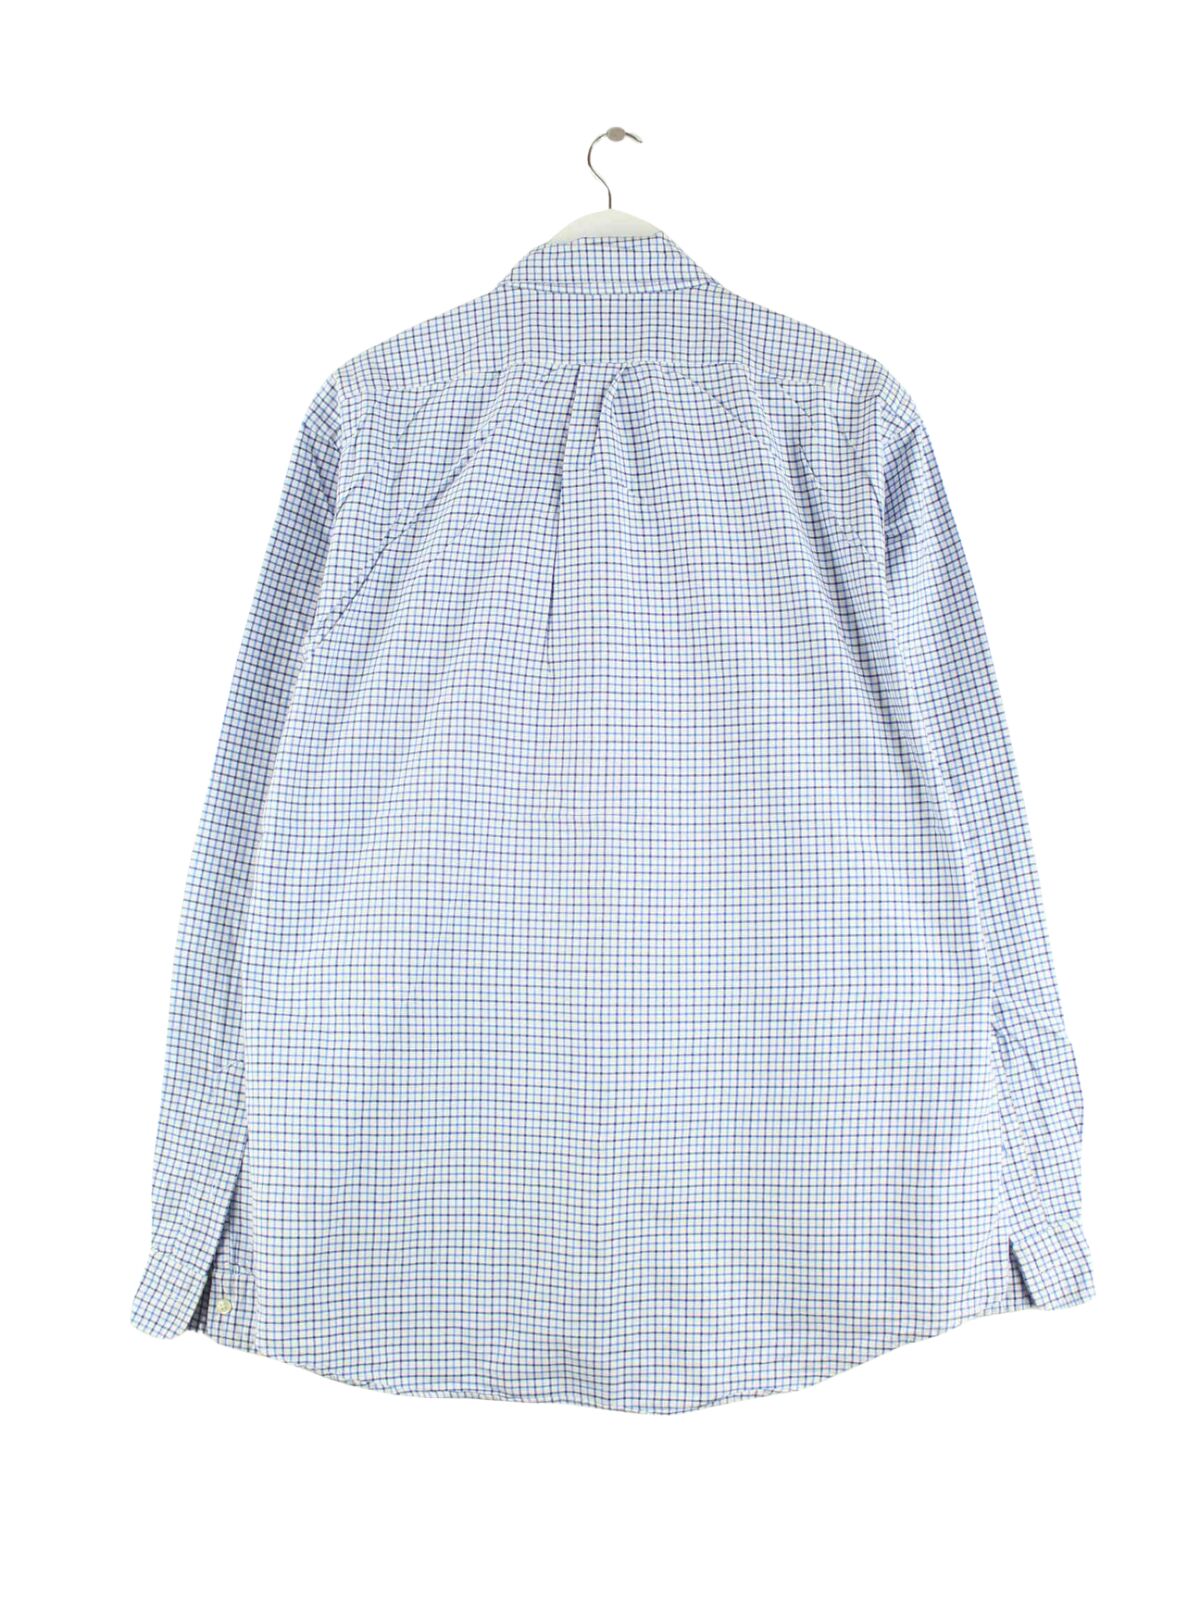 Ralph Lauren Classic Fit Checked Hemd Blau XL (back image)